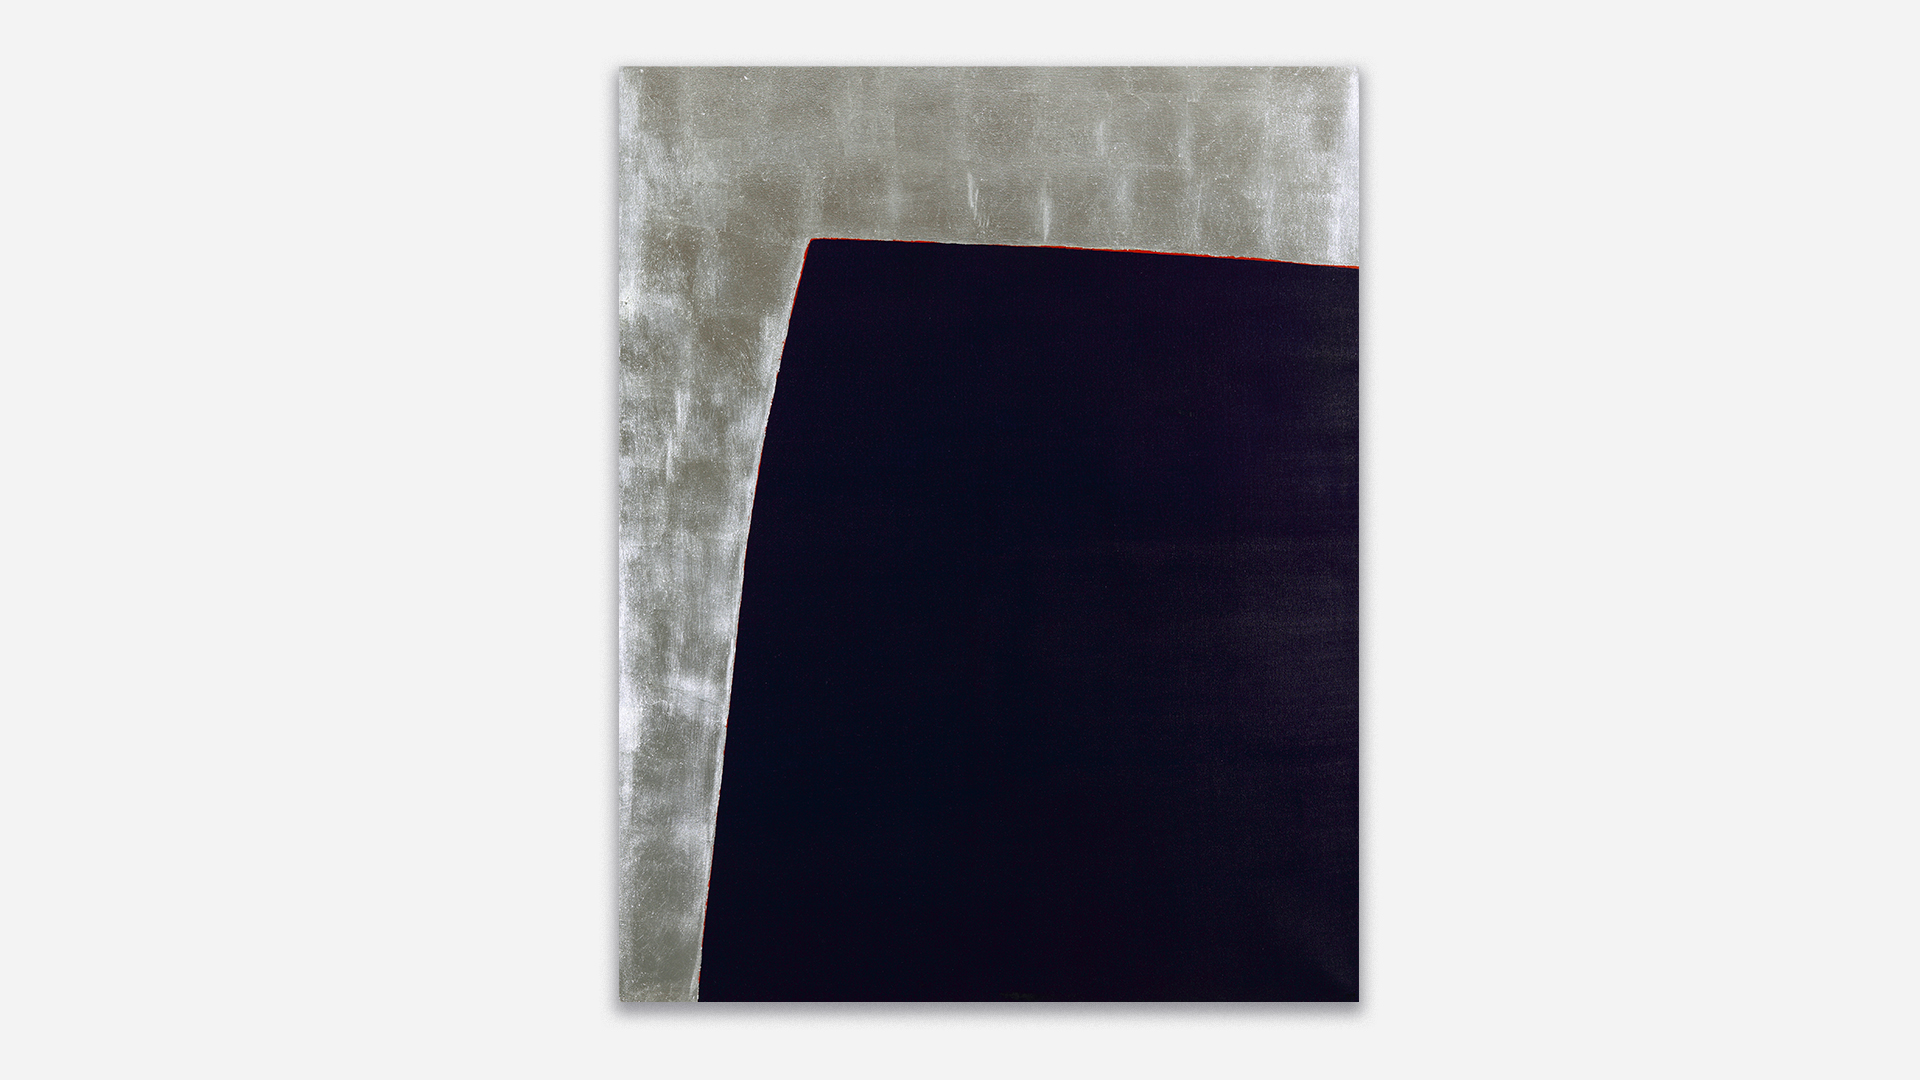 Anna-Eva Bergman, N°13-1977 Cap bleu, 1977, Acrylic and metal leaf on canvas, 180 x 142 cm